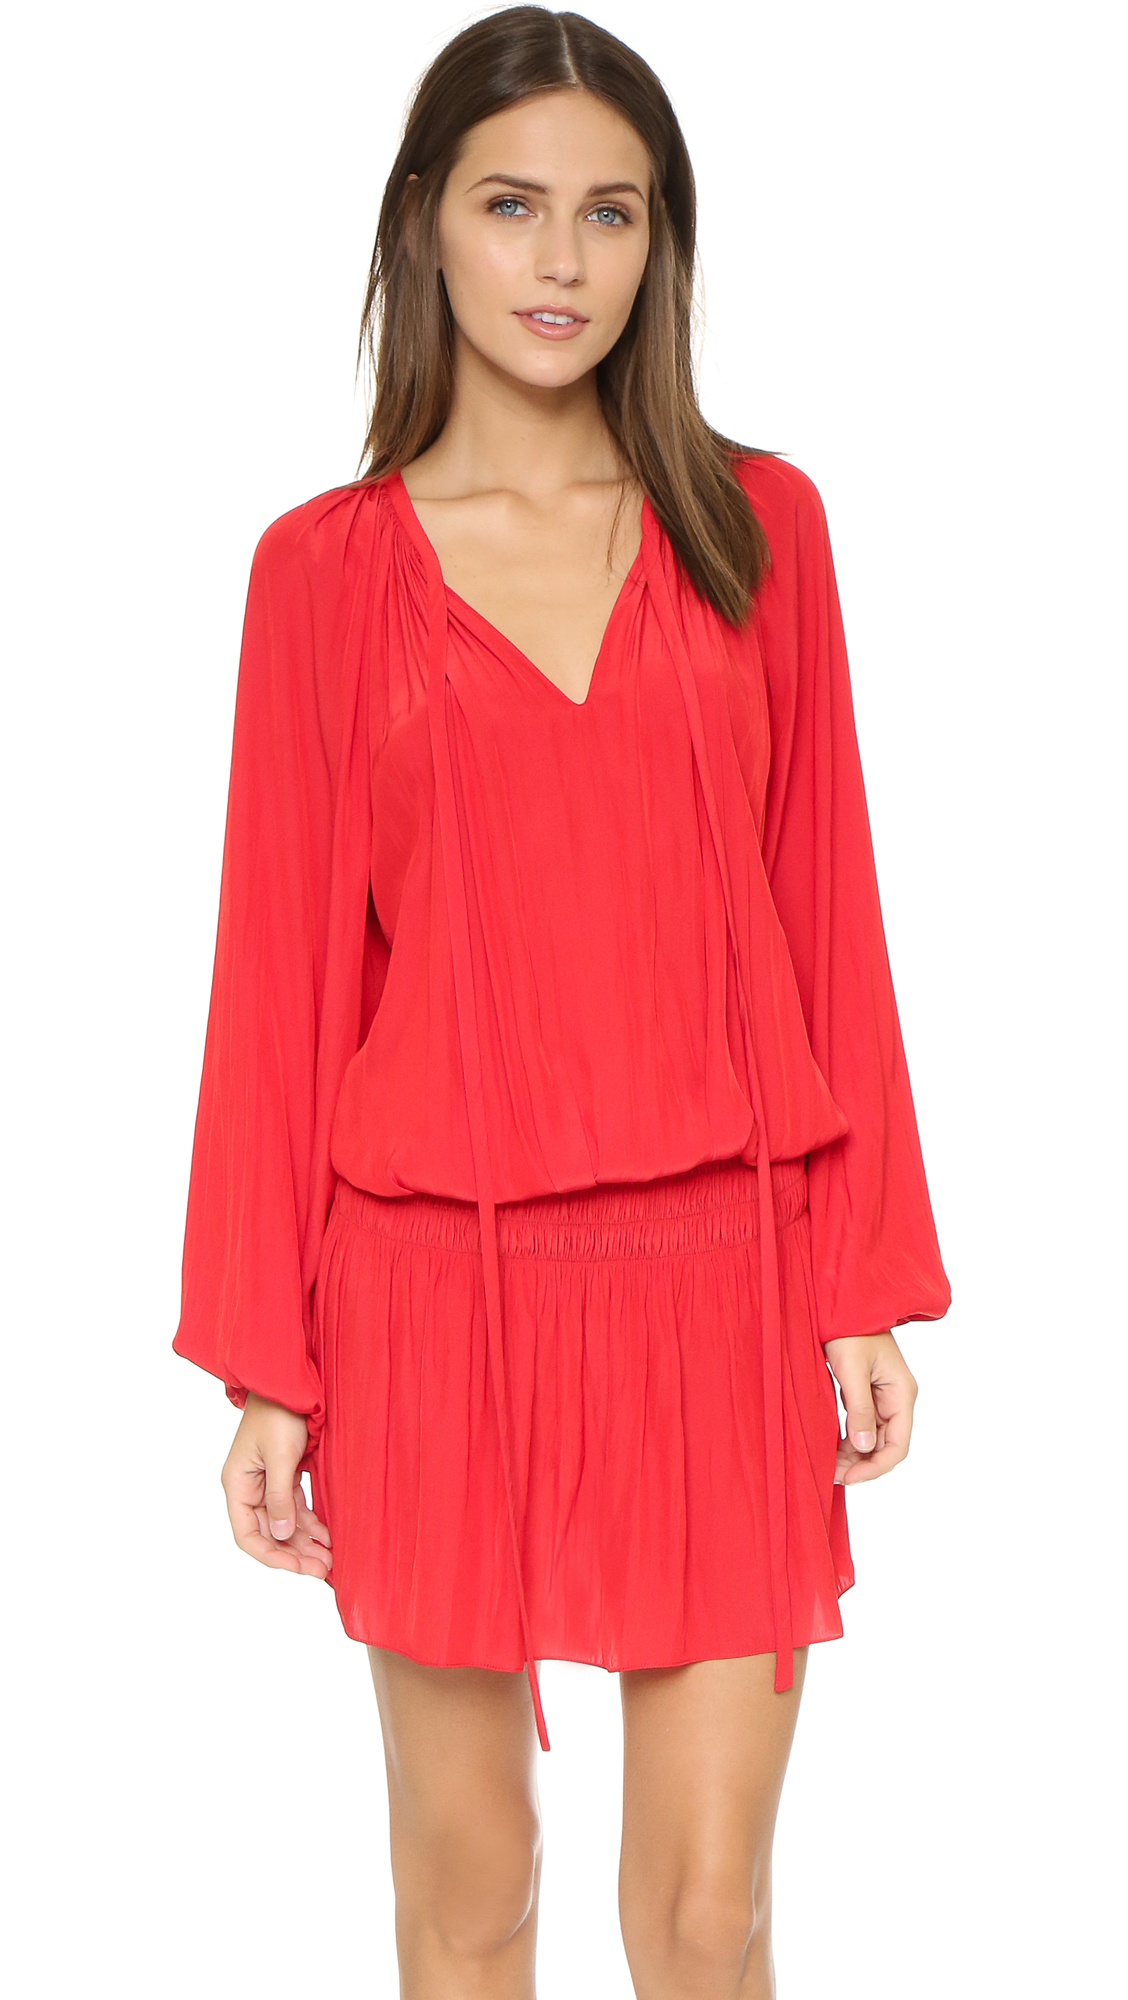 Lyst - Ramy Brook Paris Dress in Red